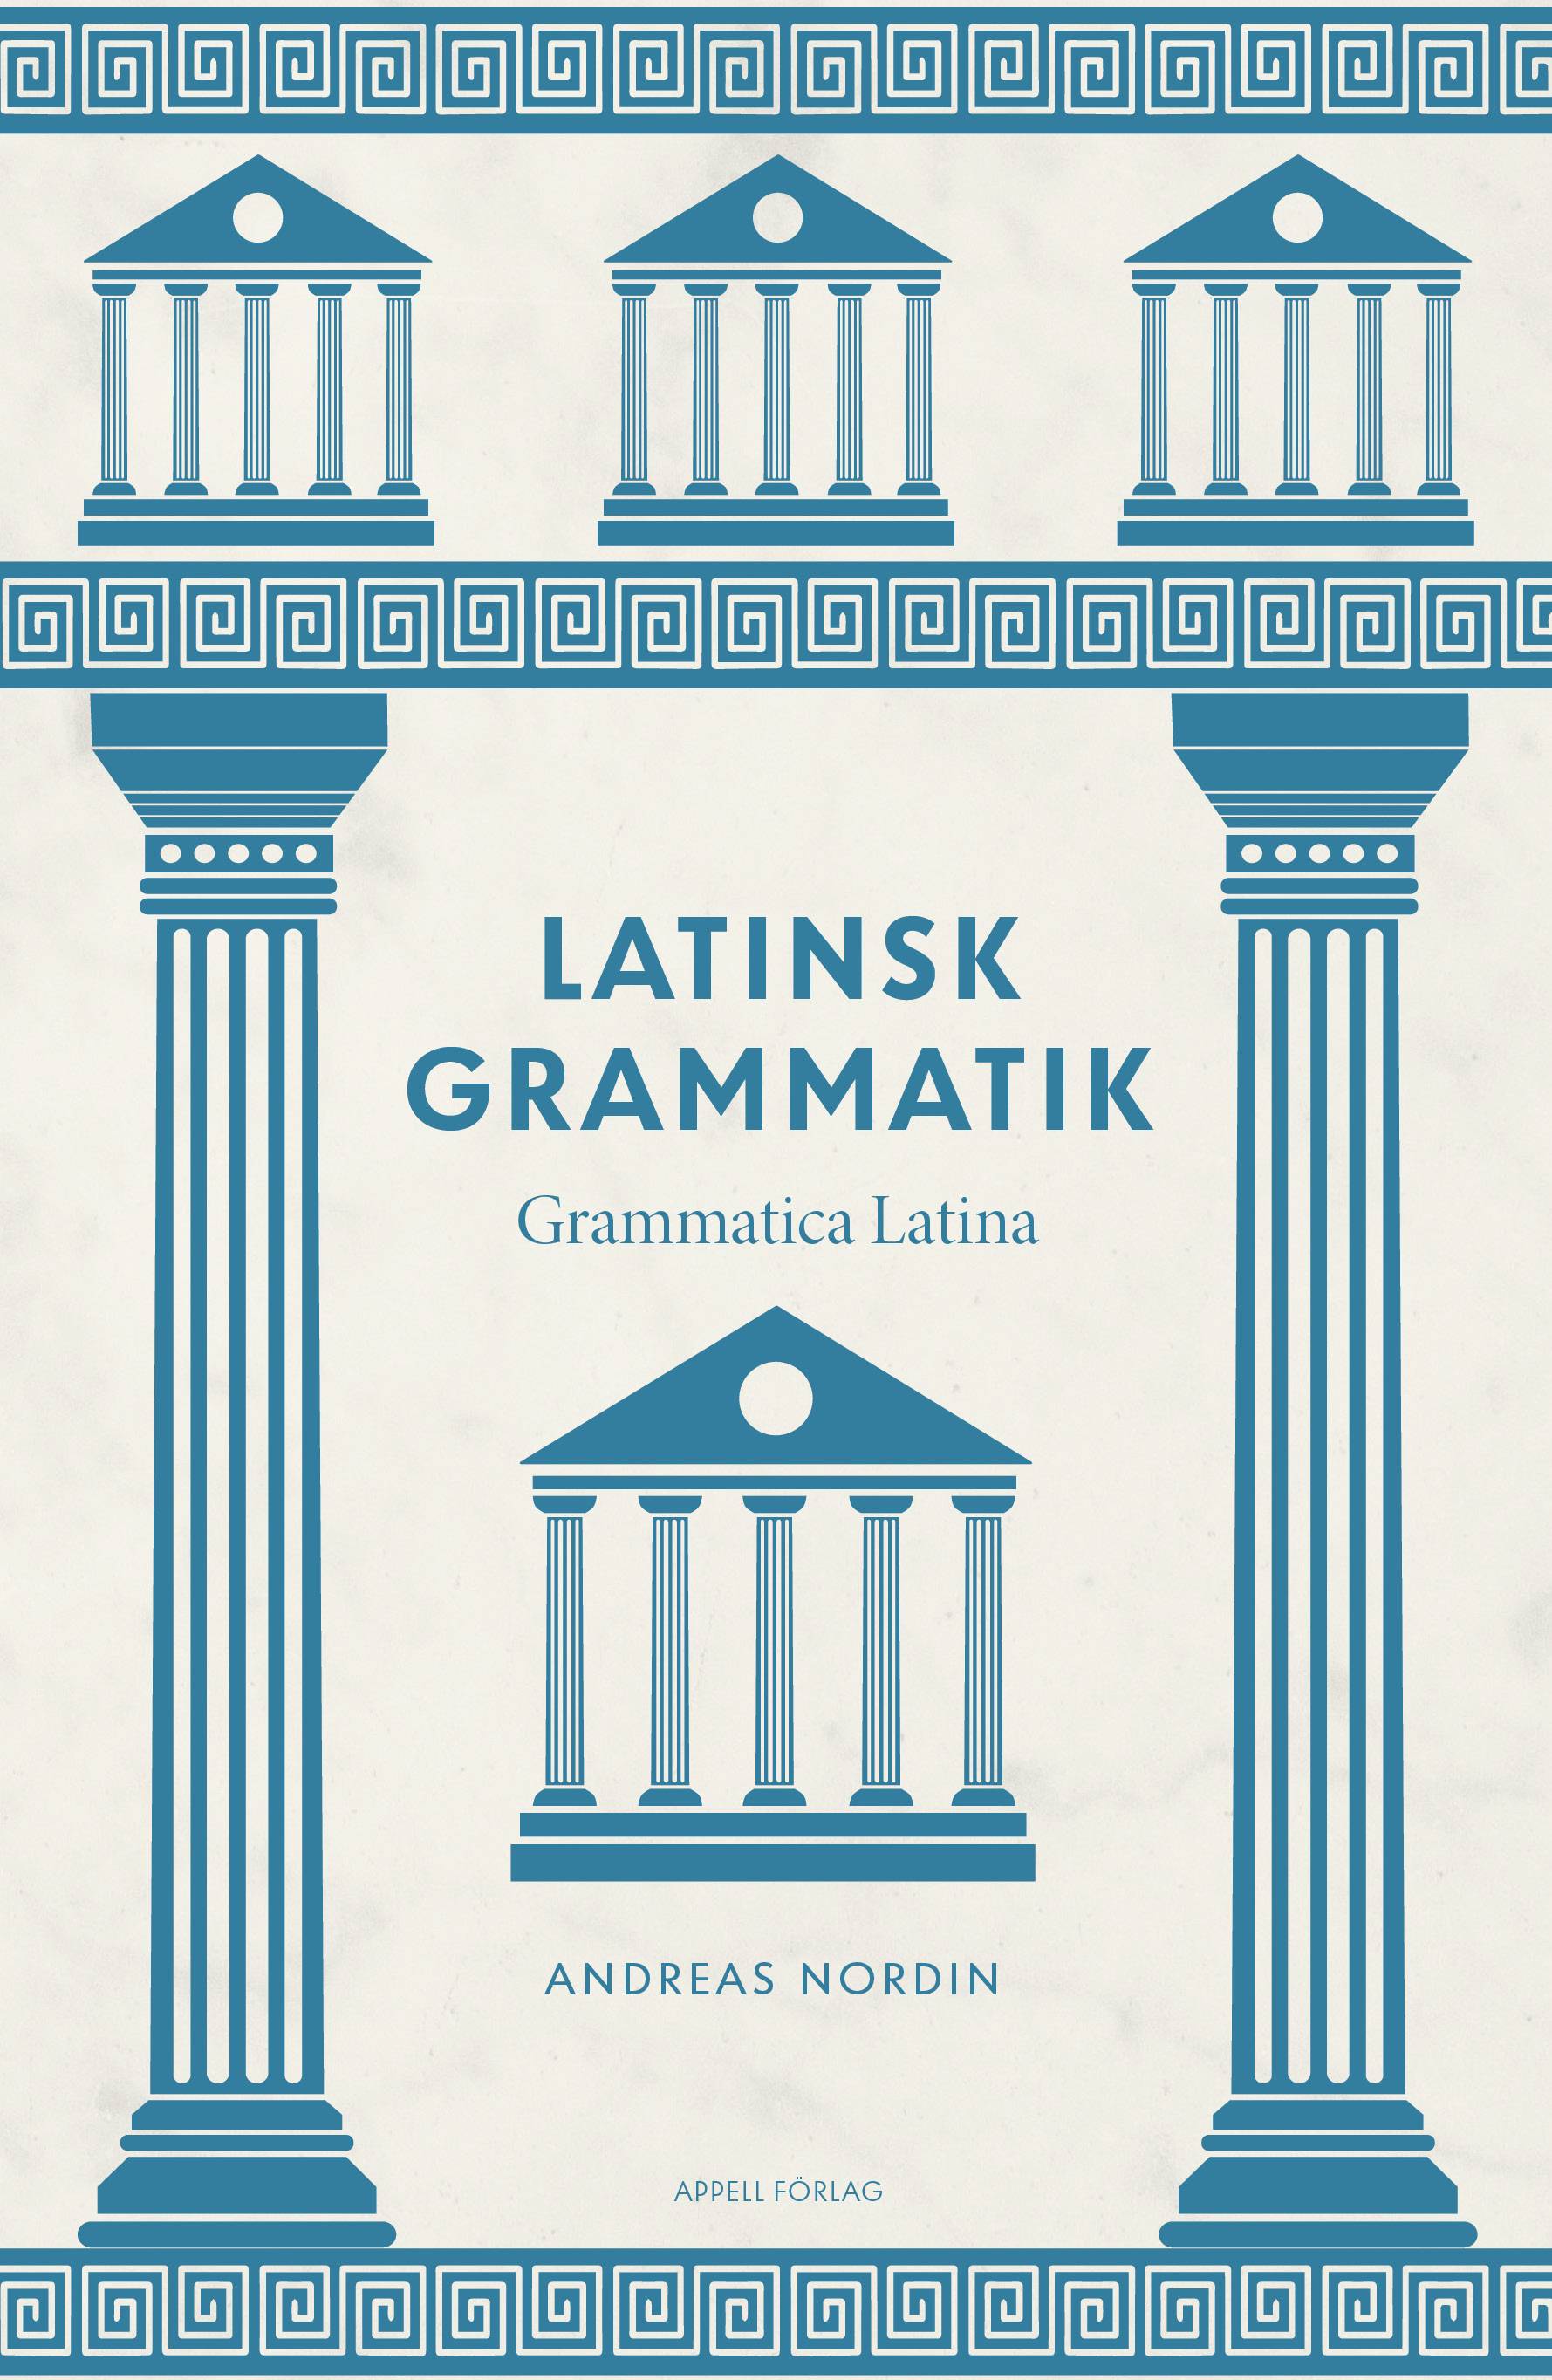 Latinsk grammatik – Grammatica Latina